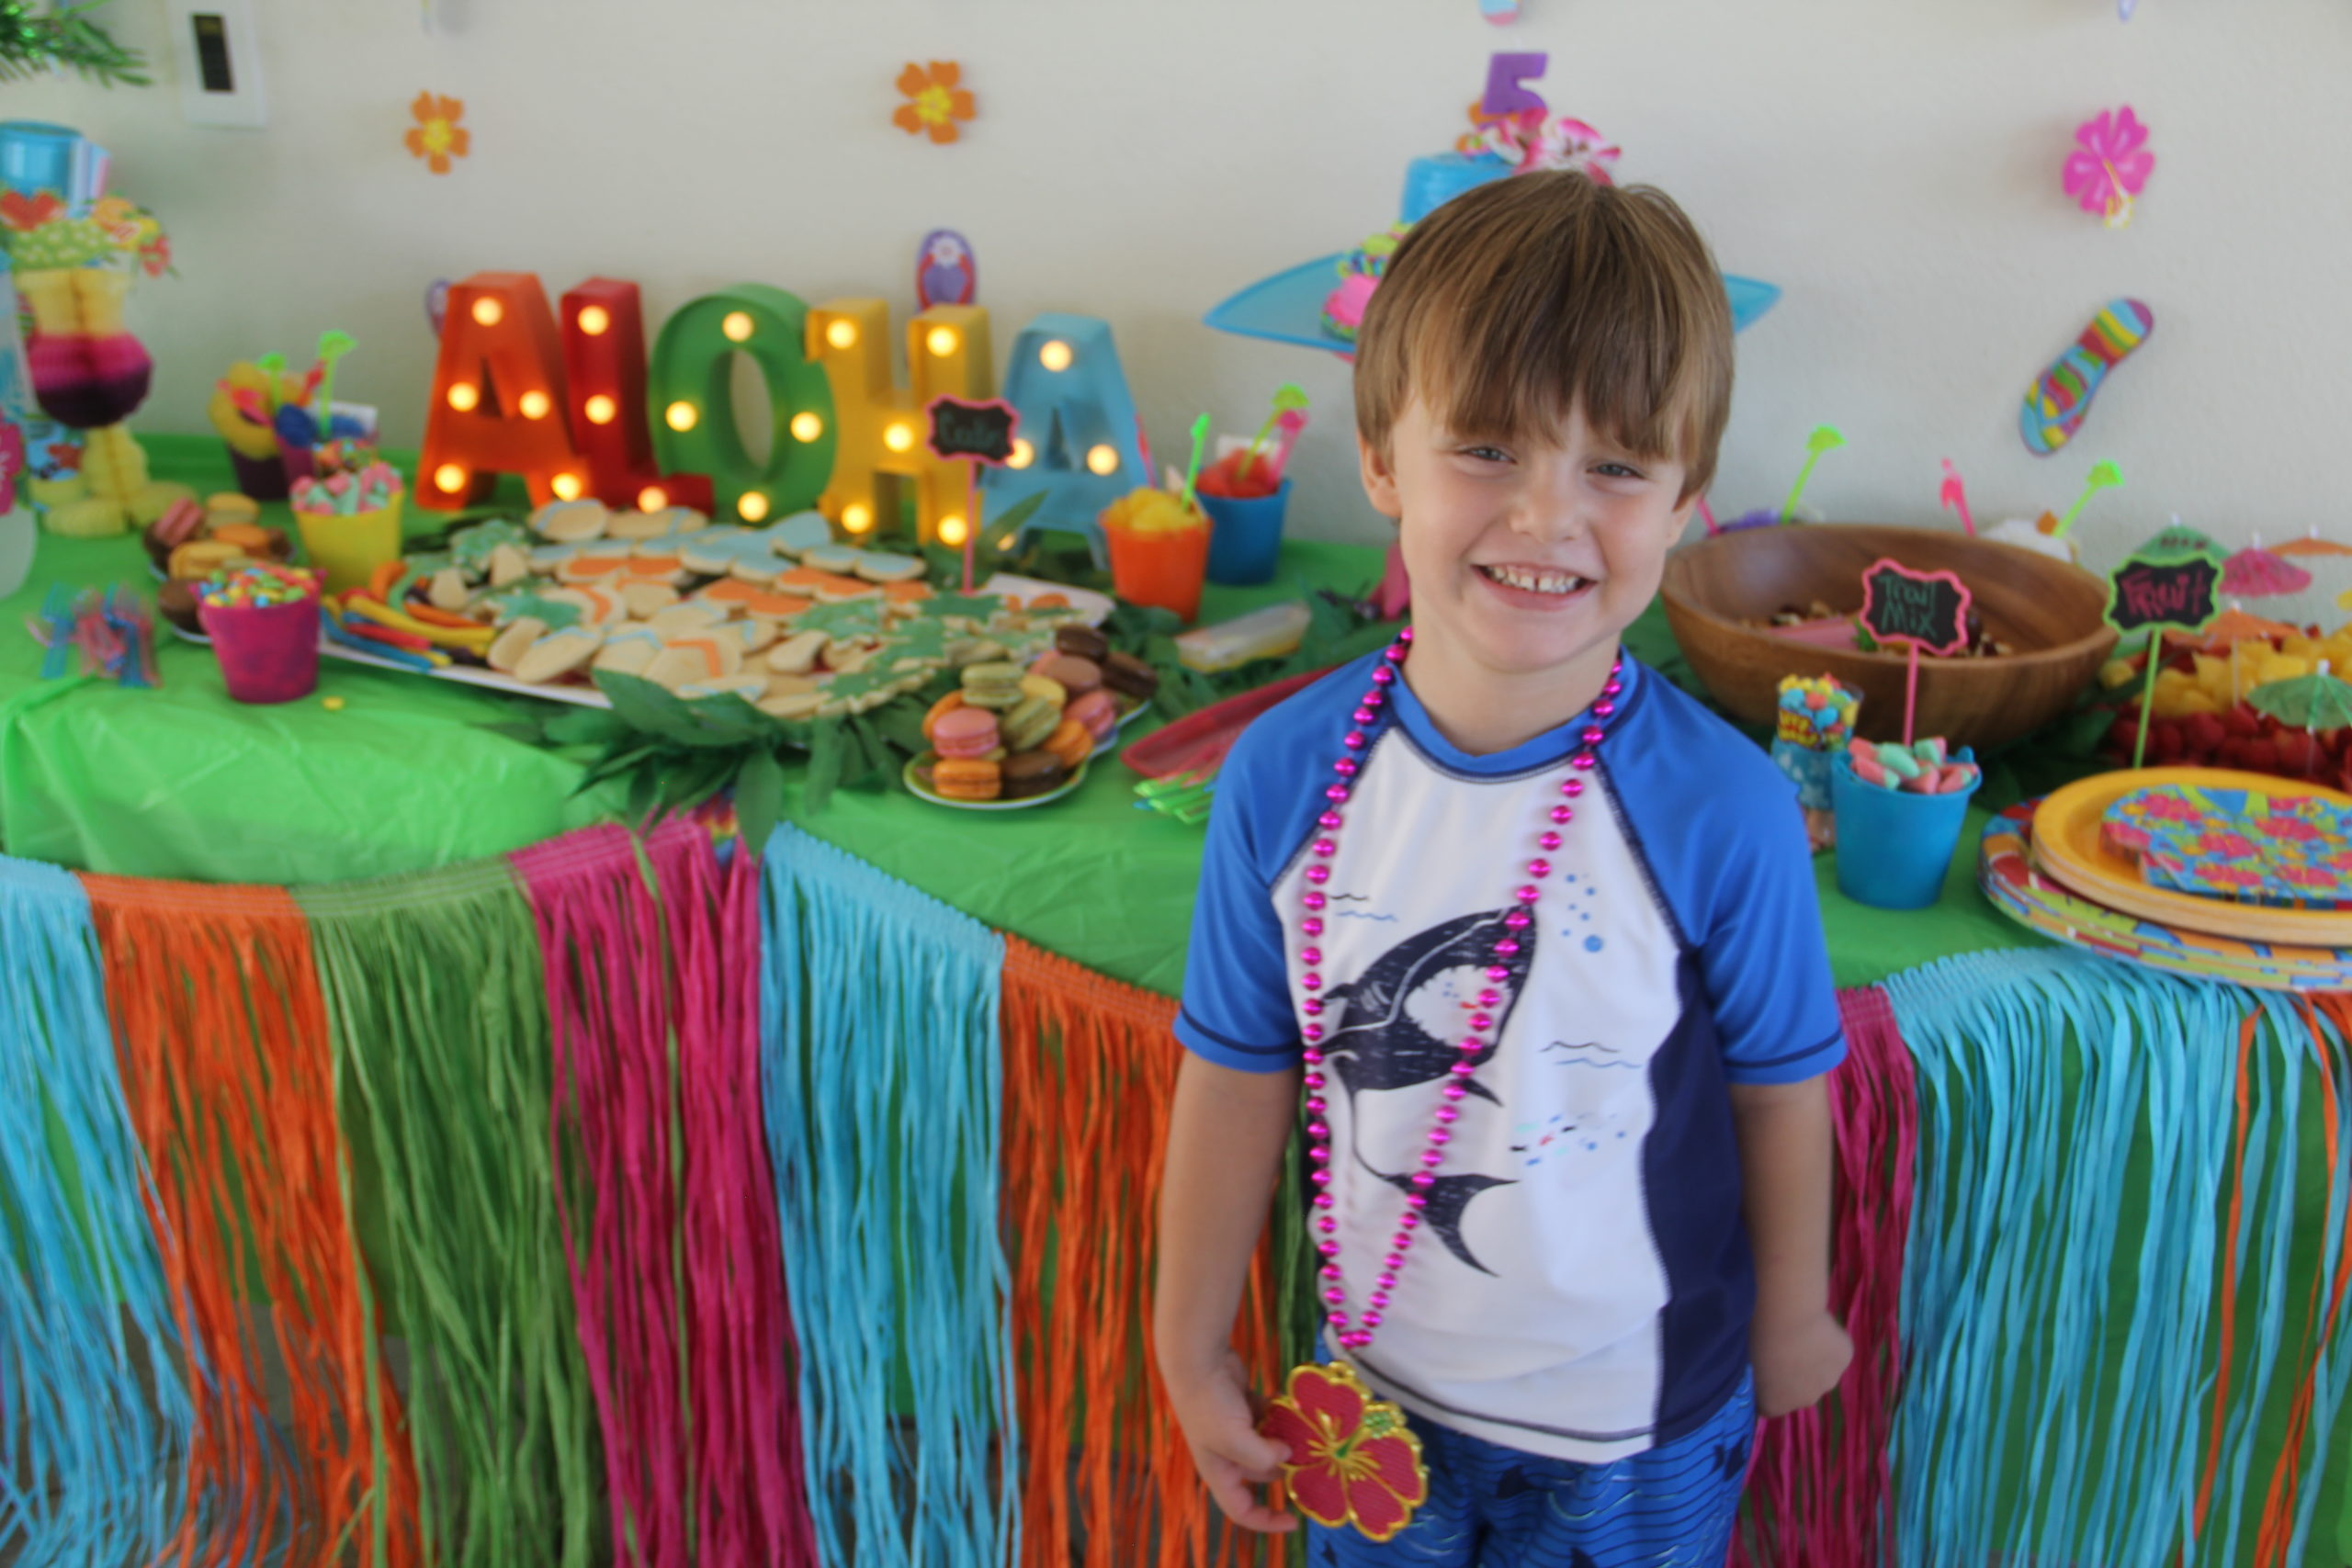 Lua Birthday Party ideas for a kids birthday